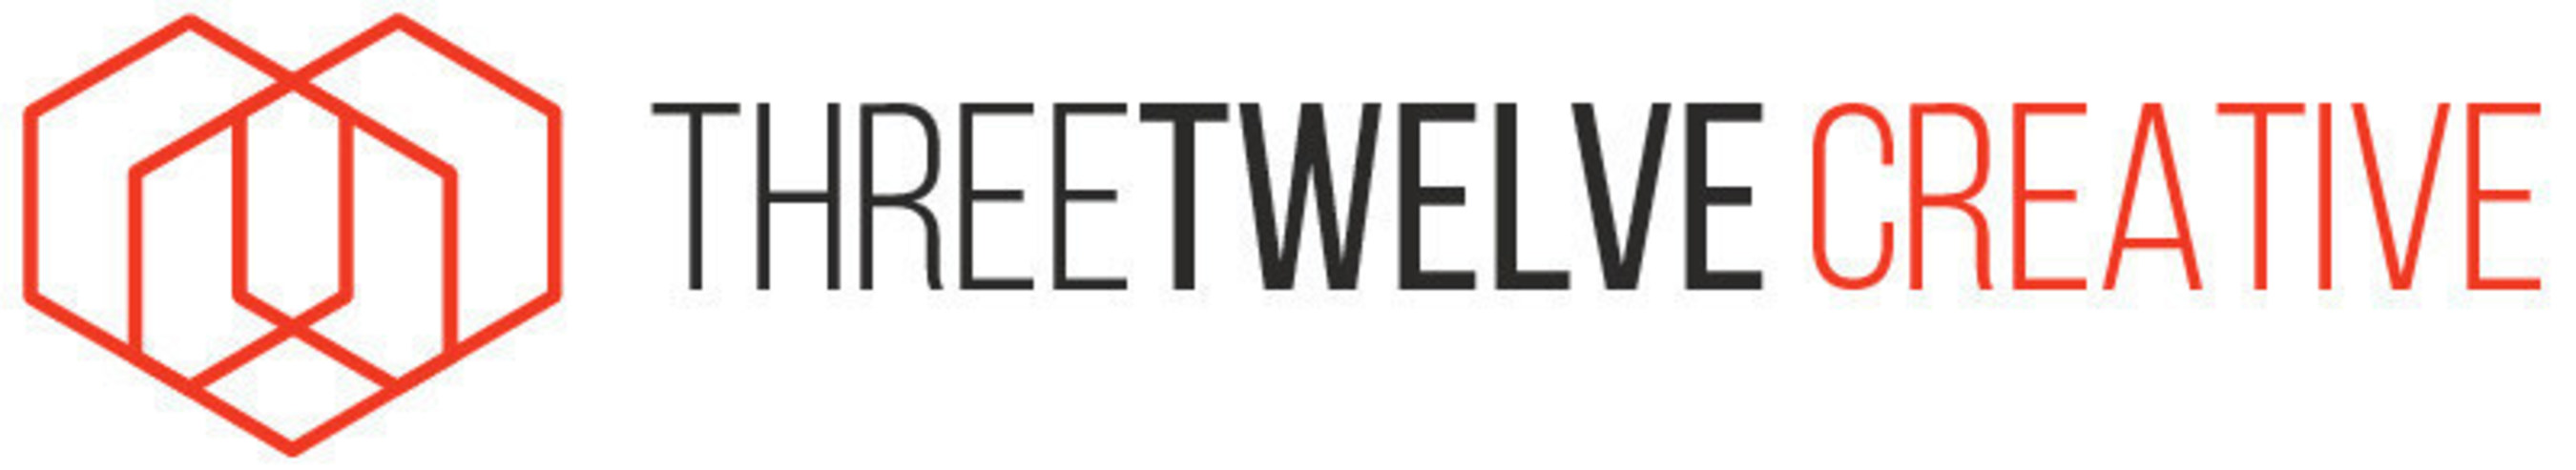 ThreeTwelve Creative, an integrated branding, marketing and creative agency for B2B, tech-focused companies